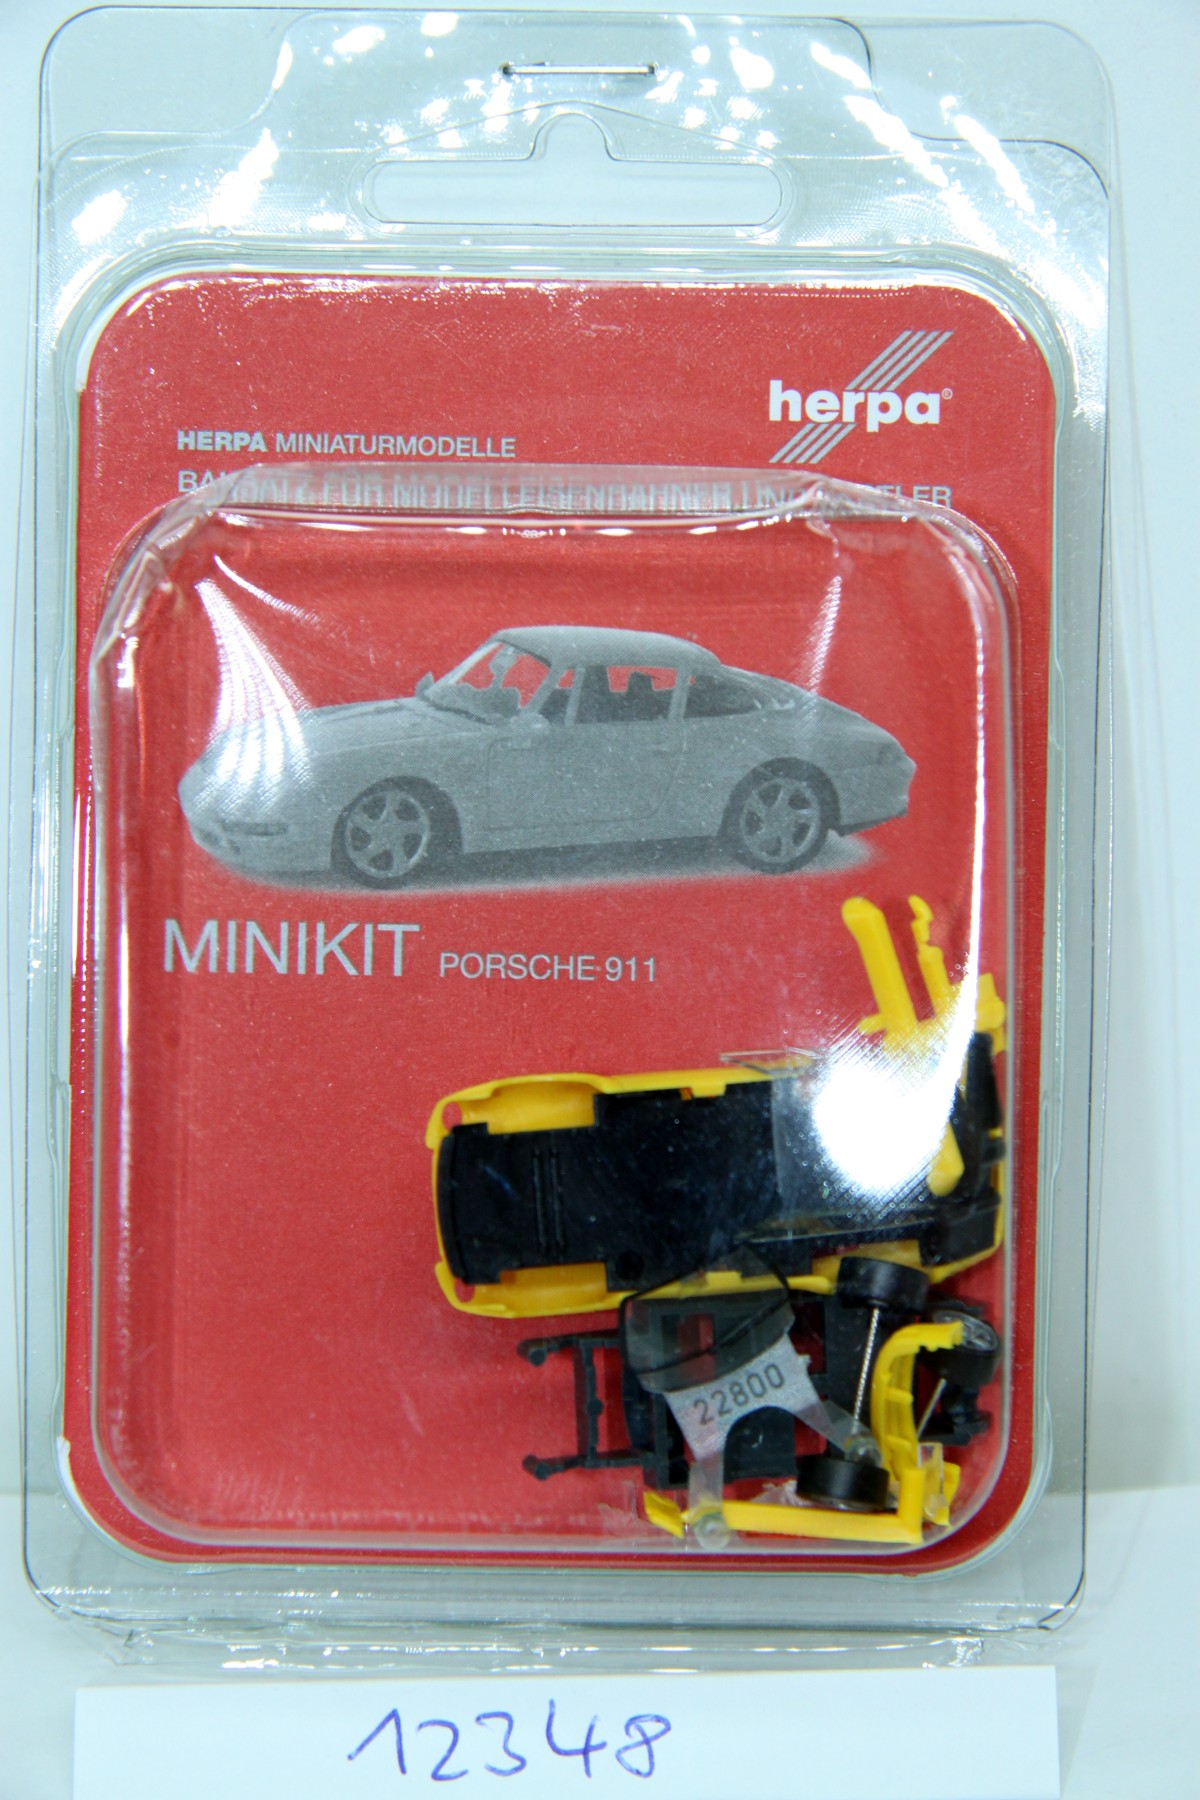 Herpa 012393, Minikit Opel Vectra racing, black for H0 gauge,